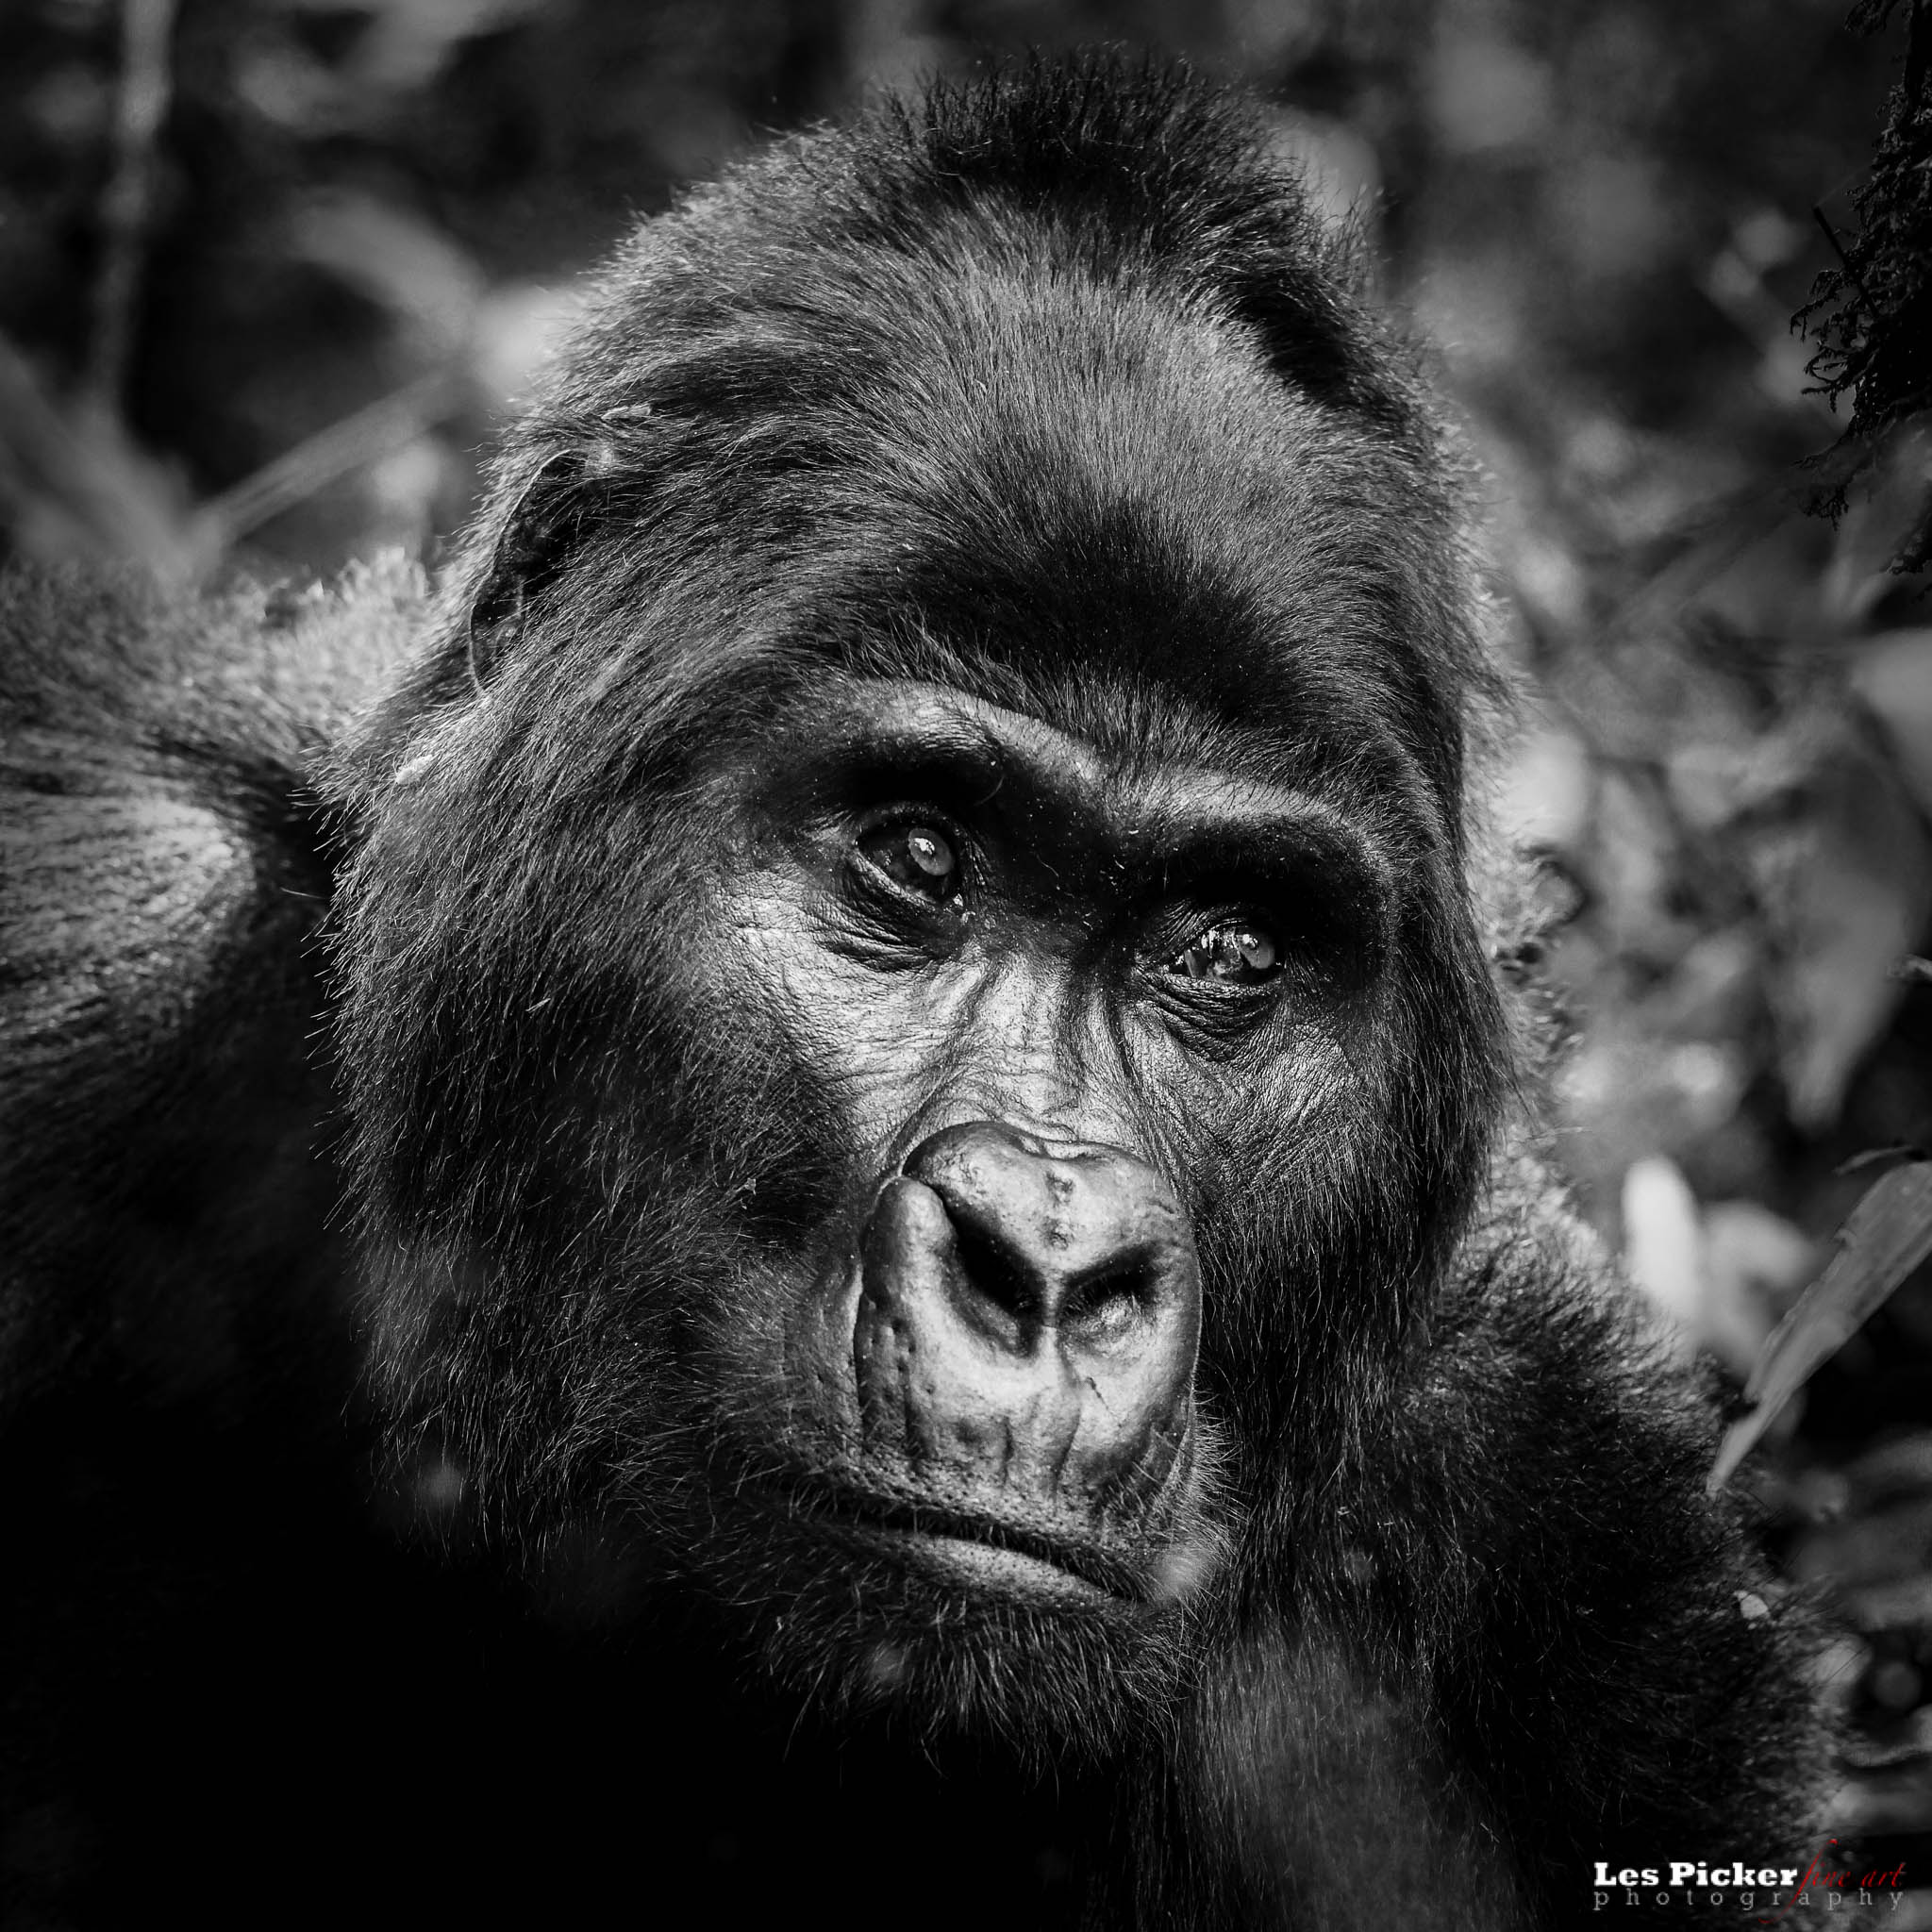 Photographing Mountain Gorillas